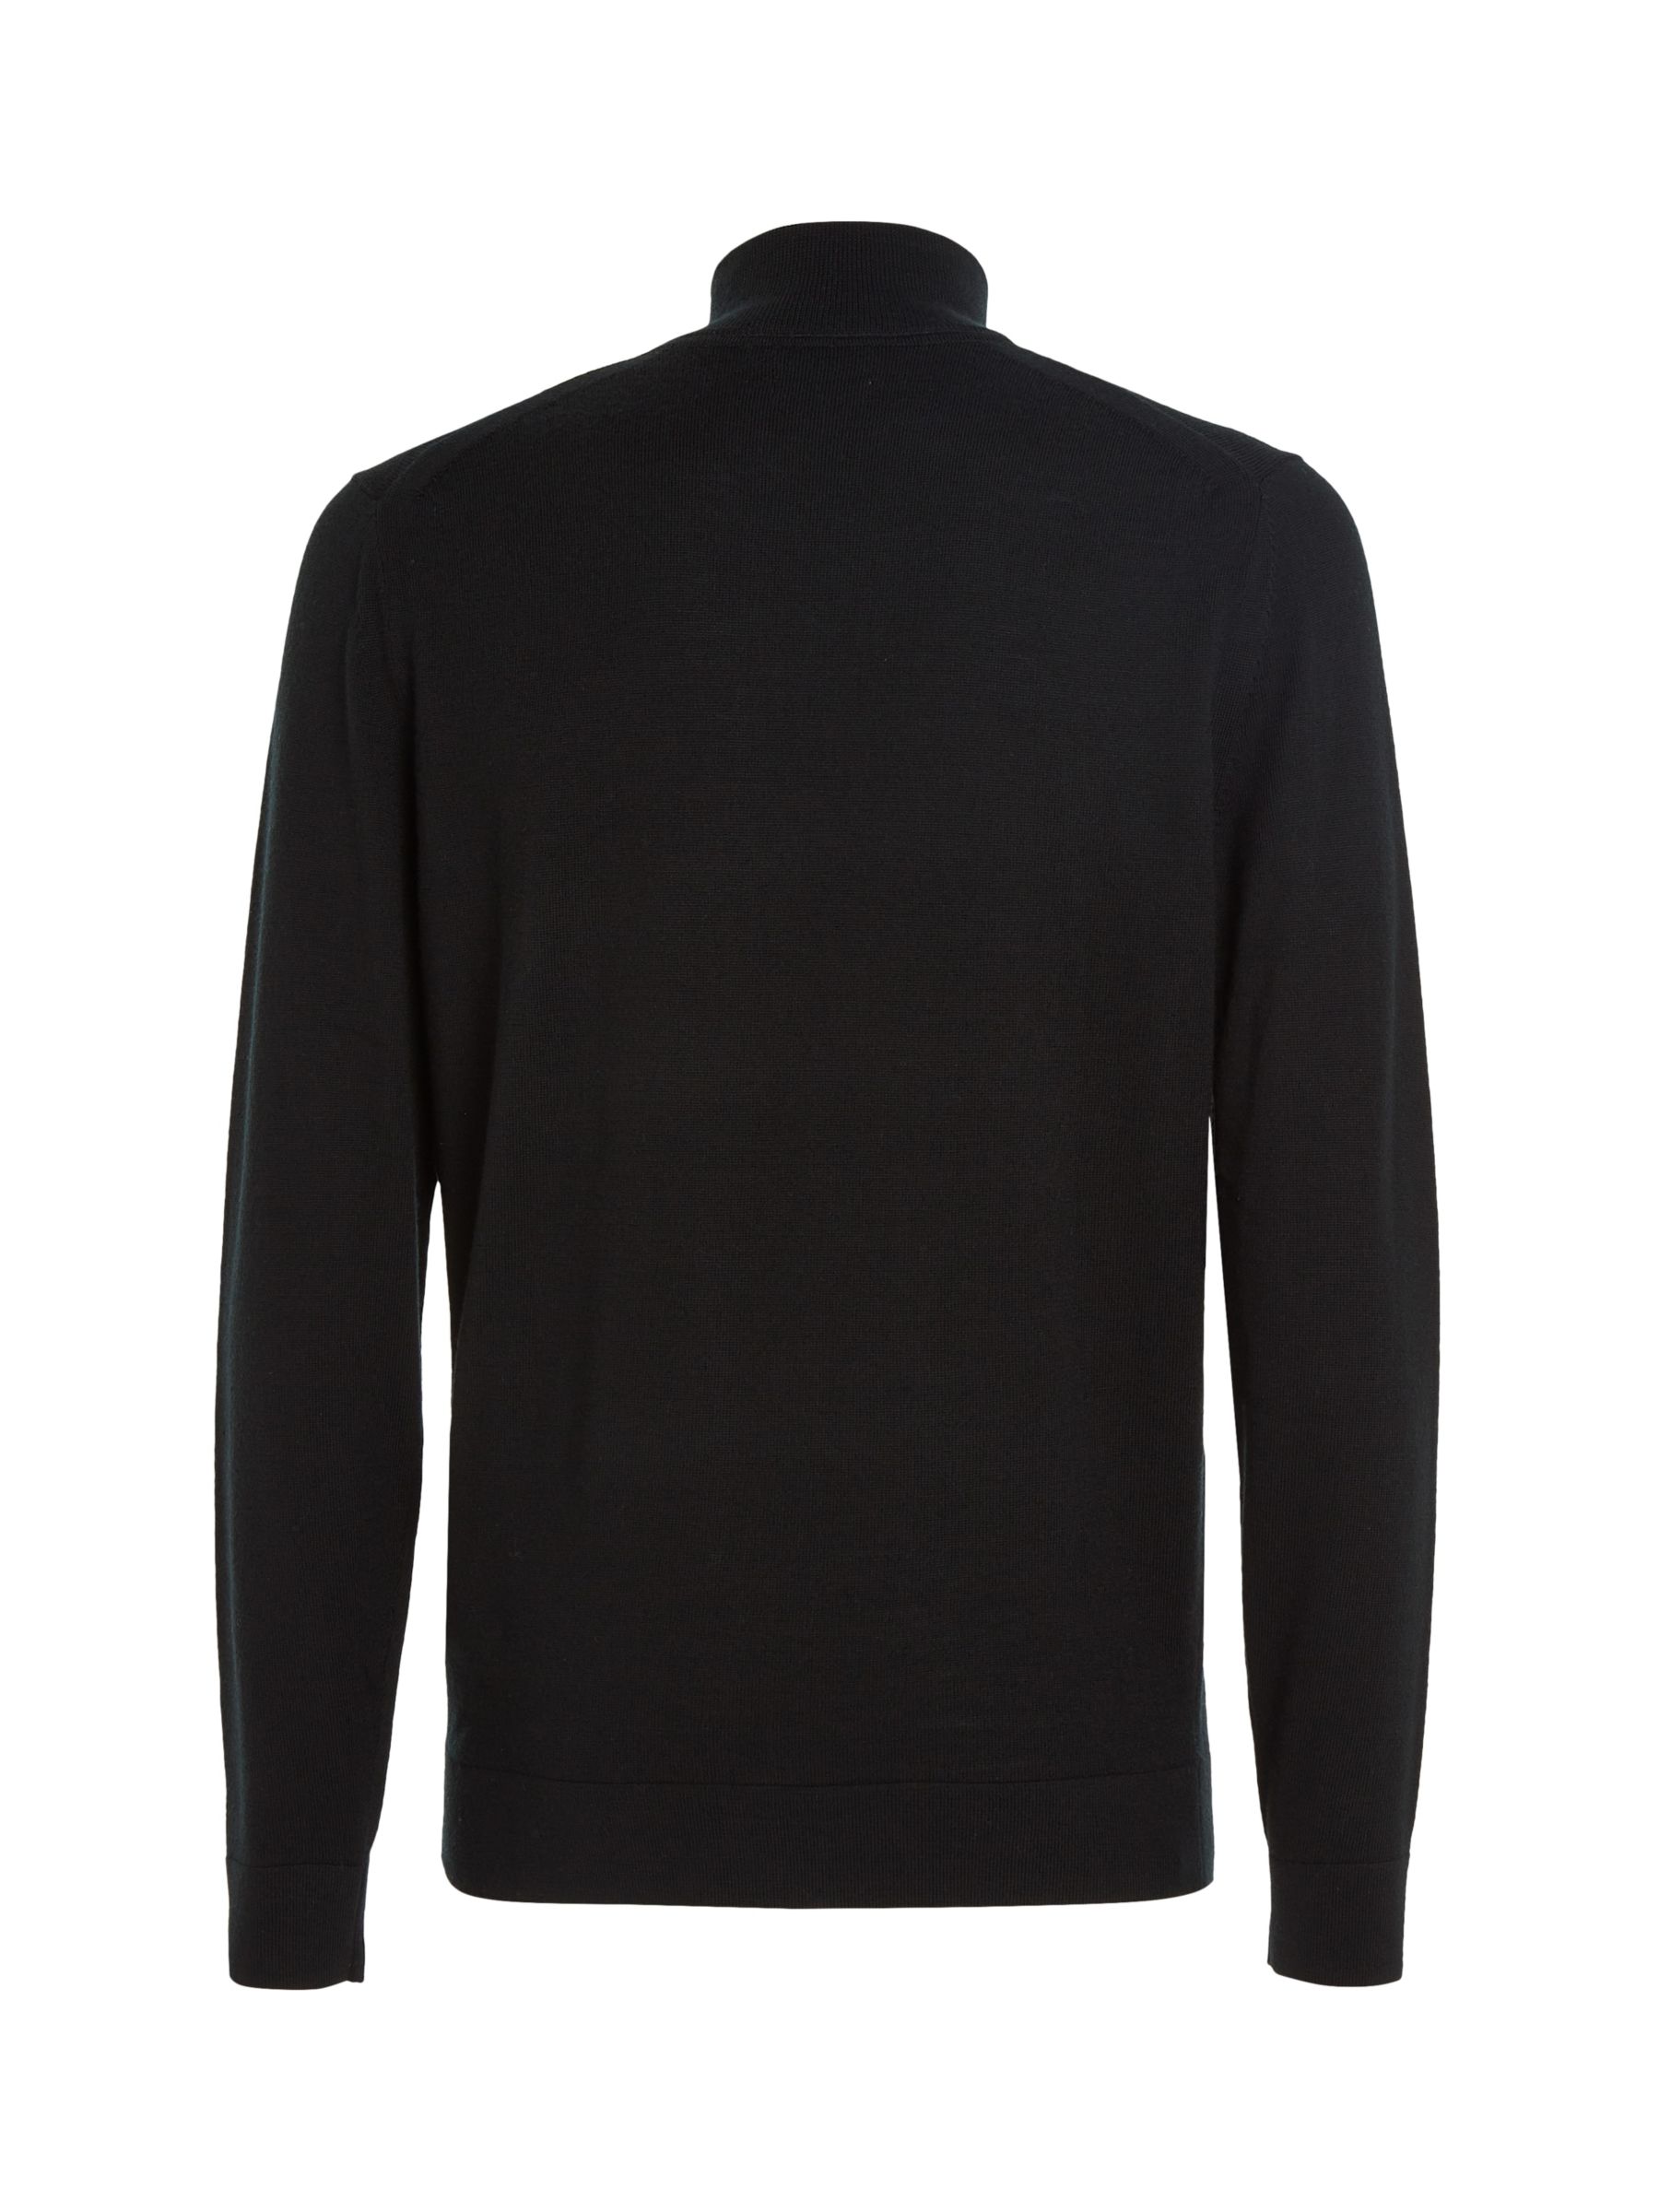 Calvin Klein Merino Wool Quater Zip Jumper, Black at John Lewis & Partners